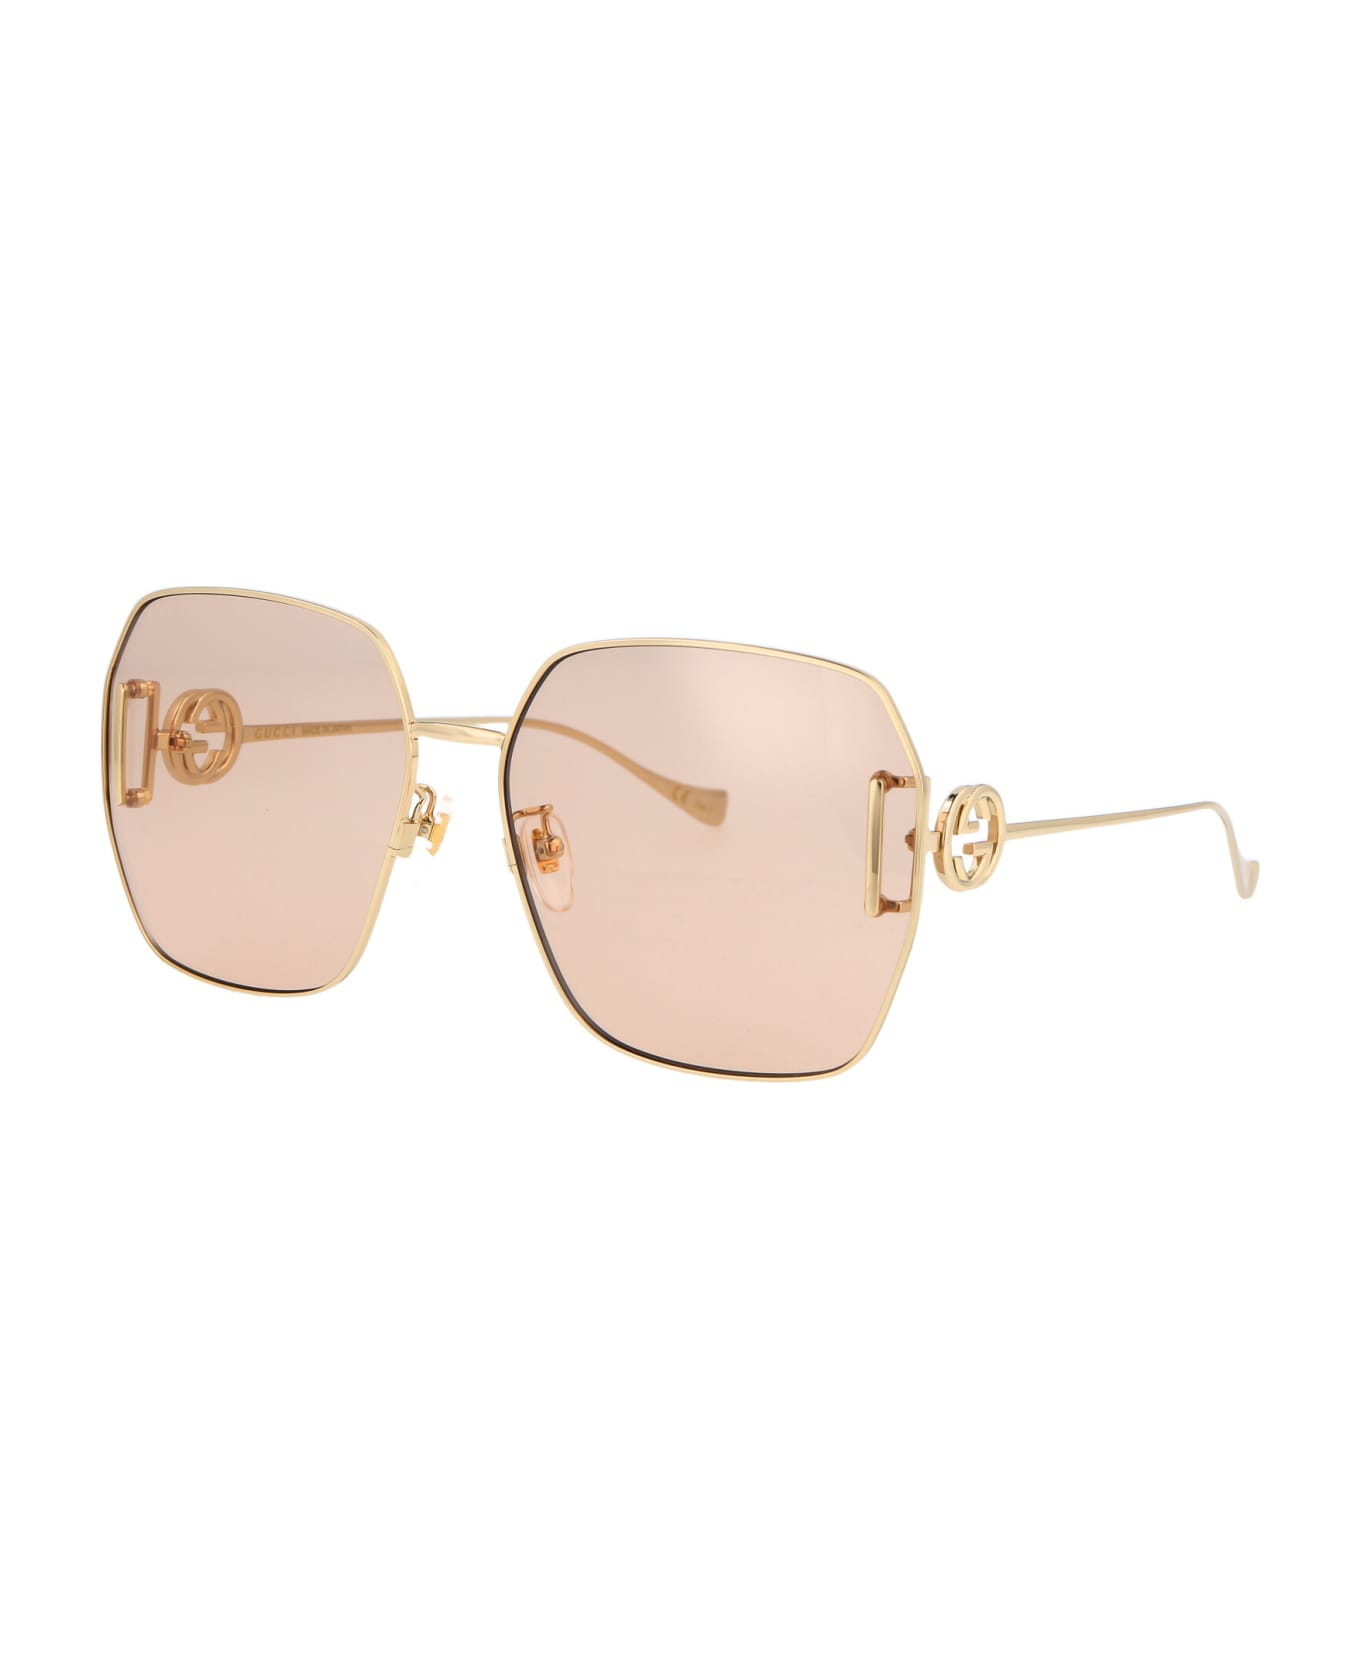 Gucci Eyewear Gg1207sa Sunglasses - 001 GOLD GOLD BROWN